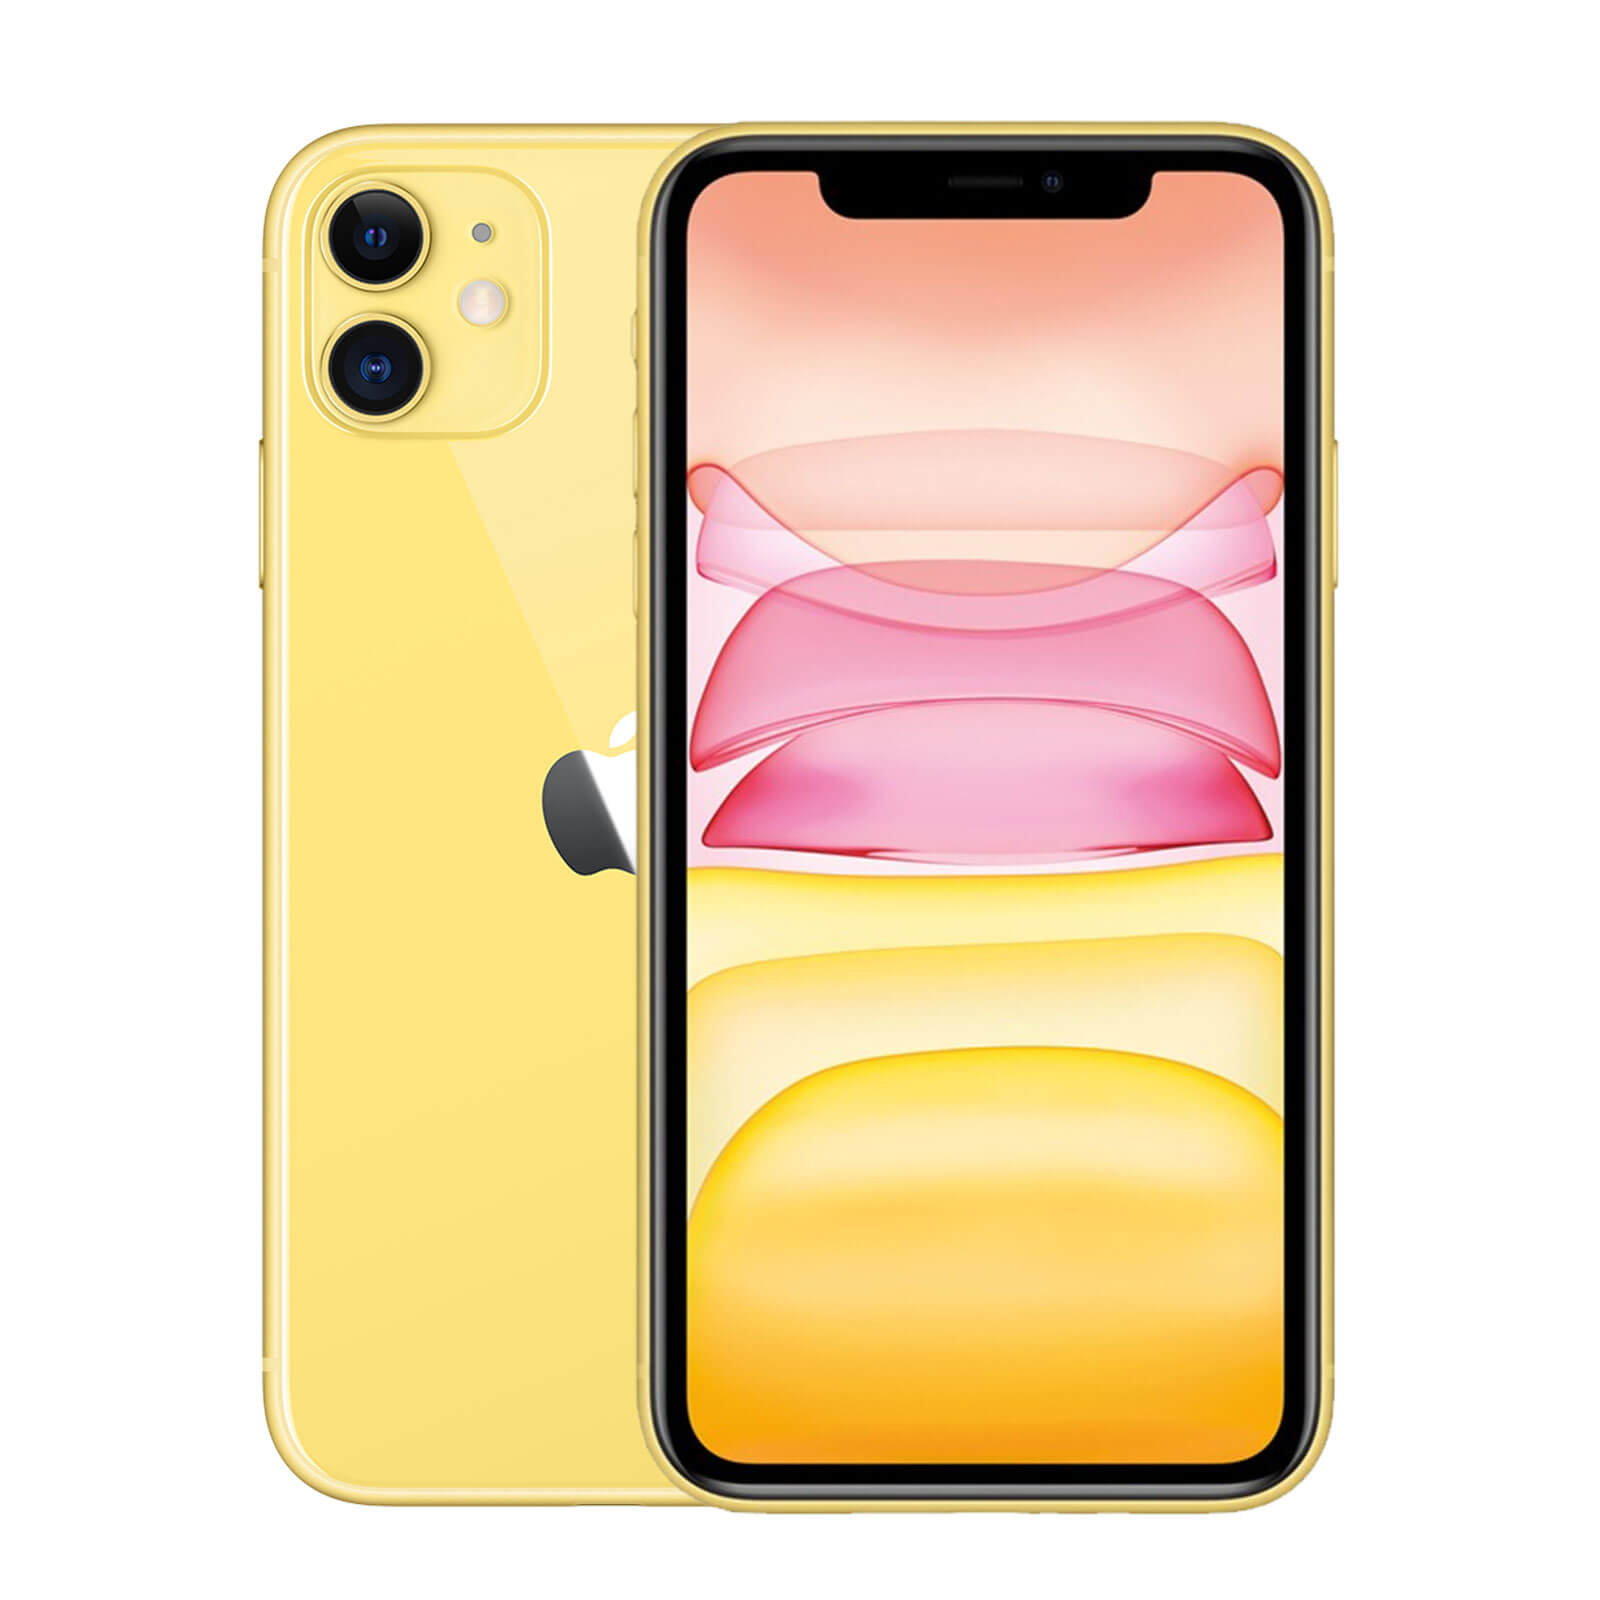 Apple iPhone 11 64GB Yellow Good - Unlocked